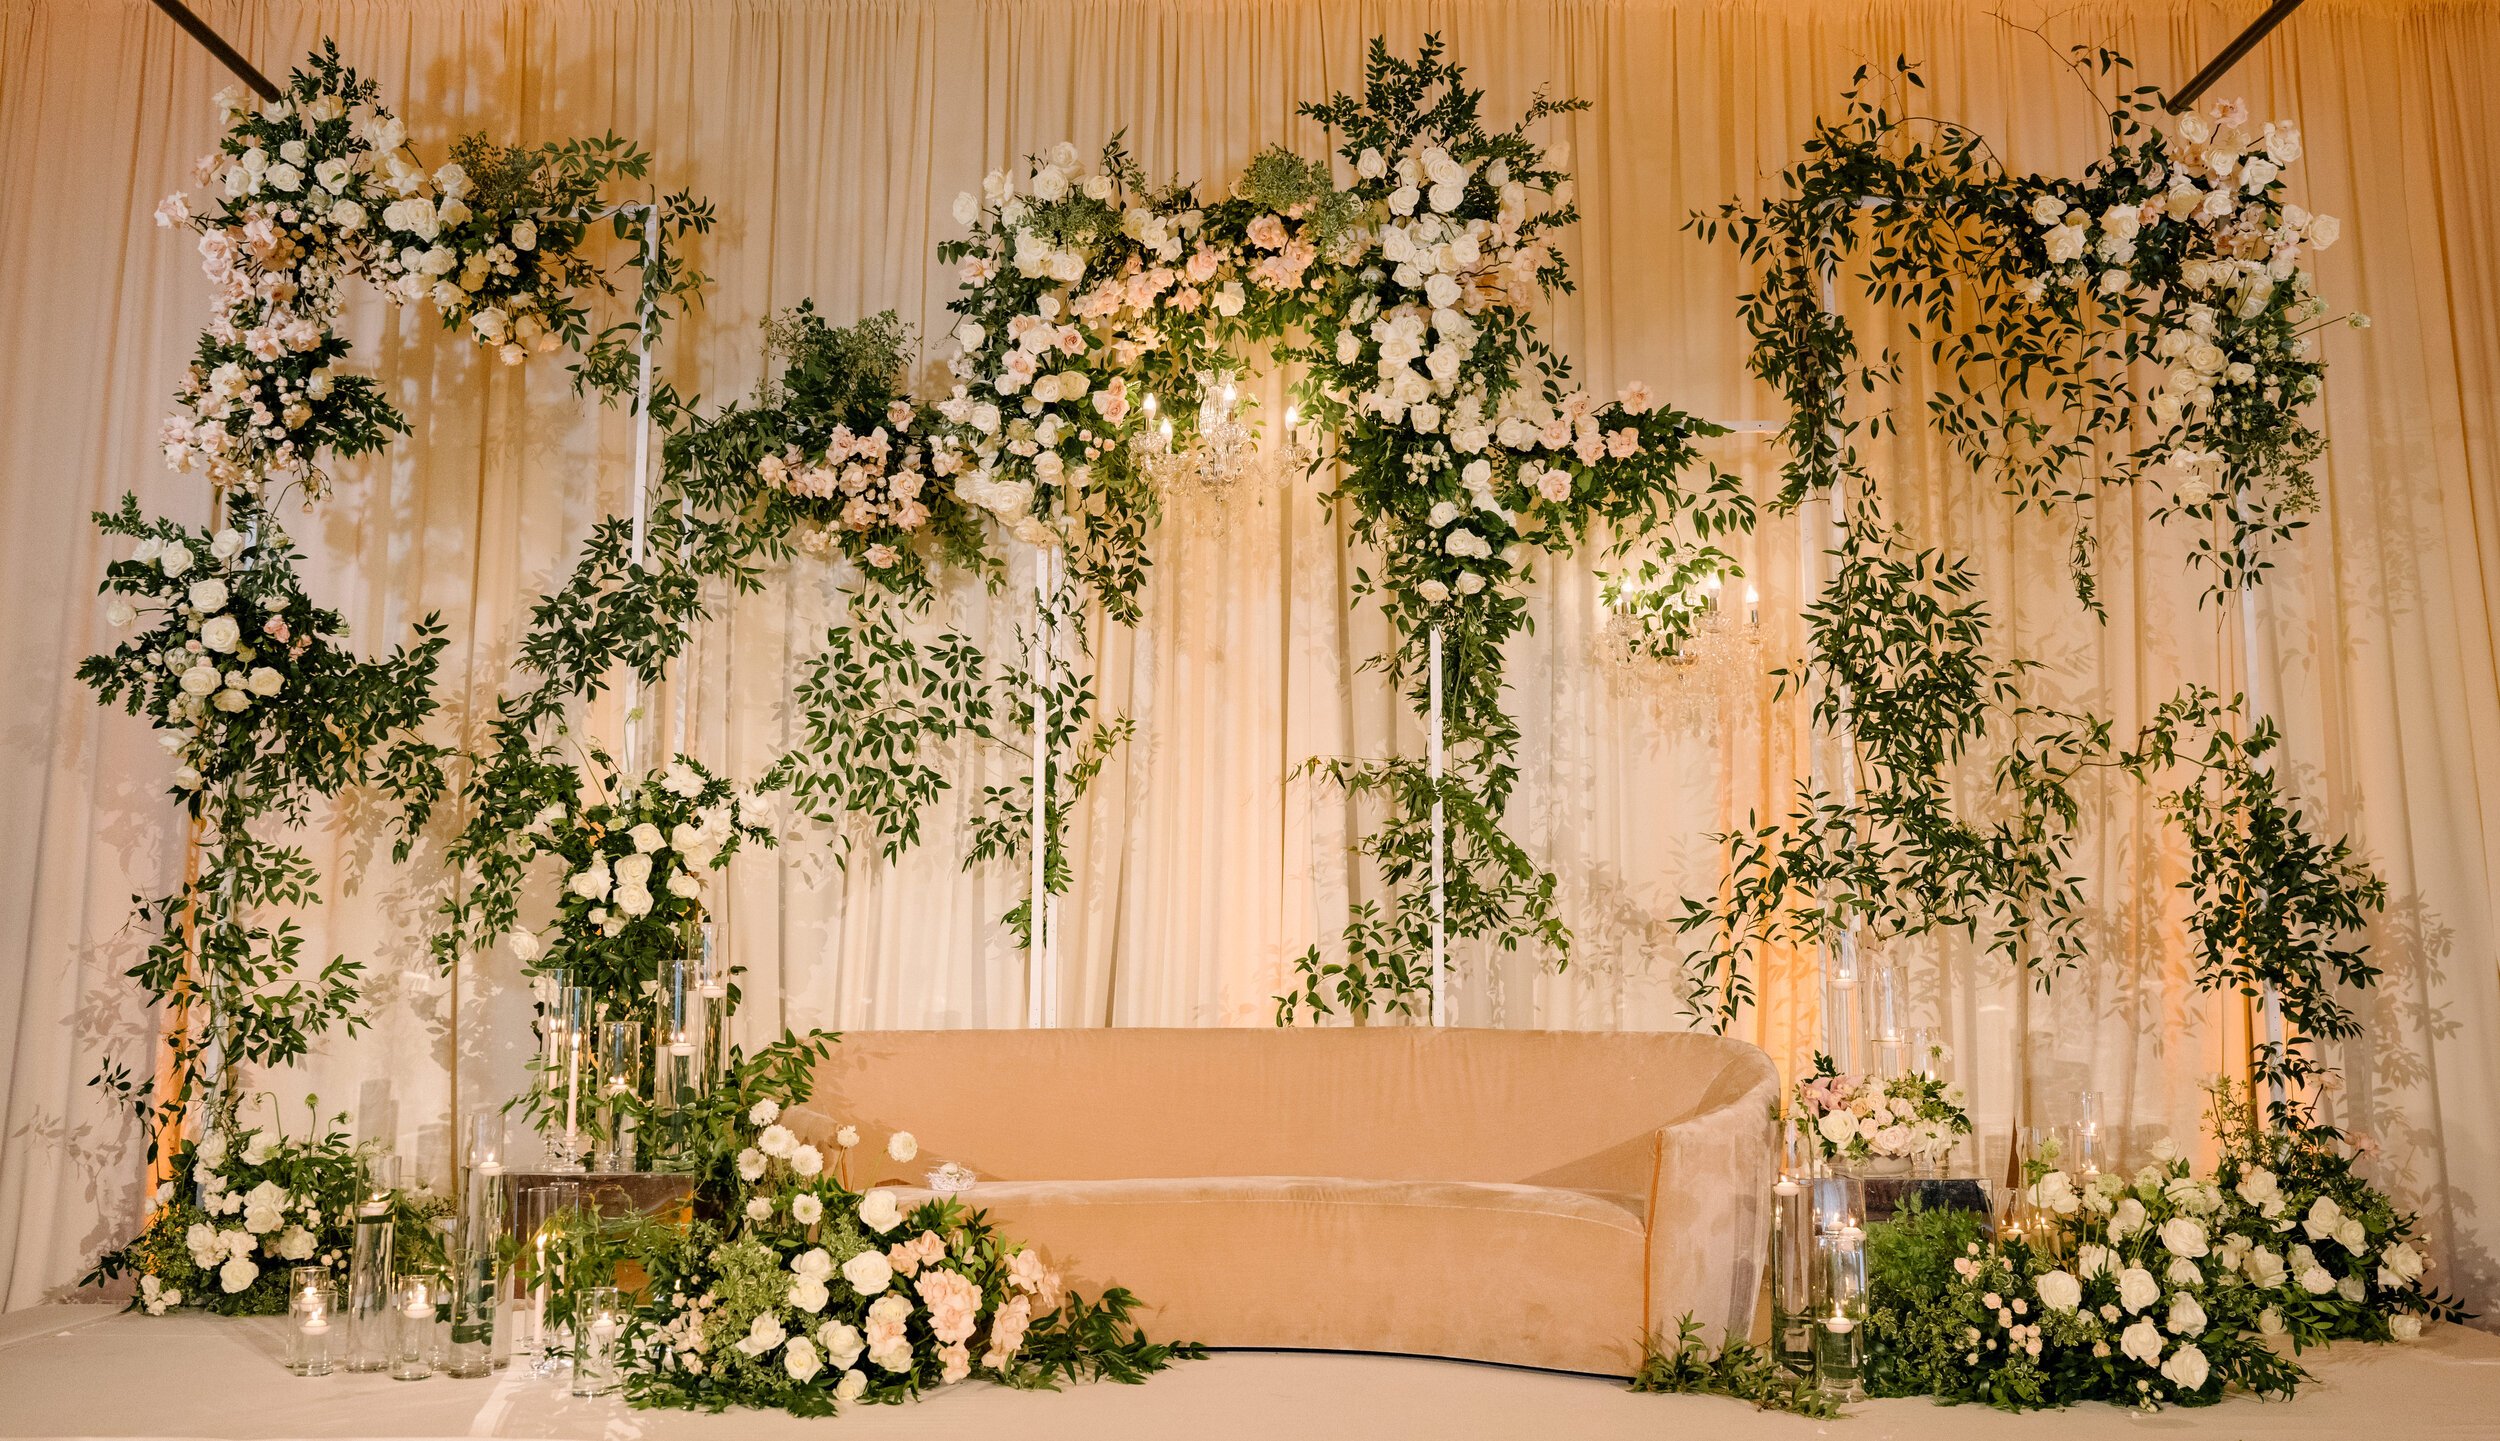 Terranea-Resort-Wedding-Reception-Sweetheart-Stage-Three-Petals-Design.jpg